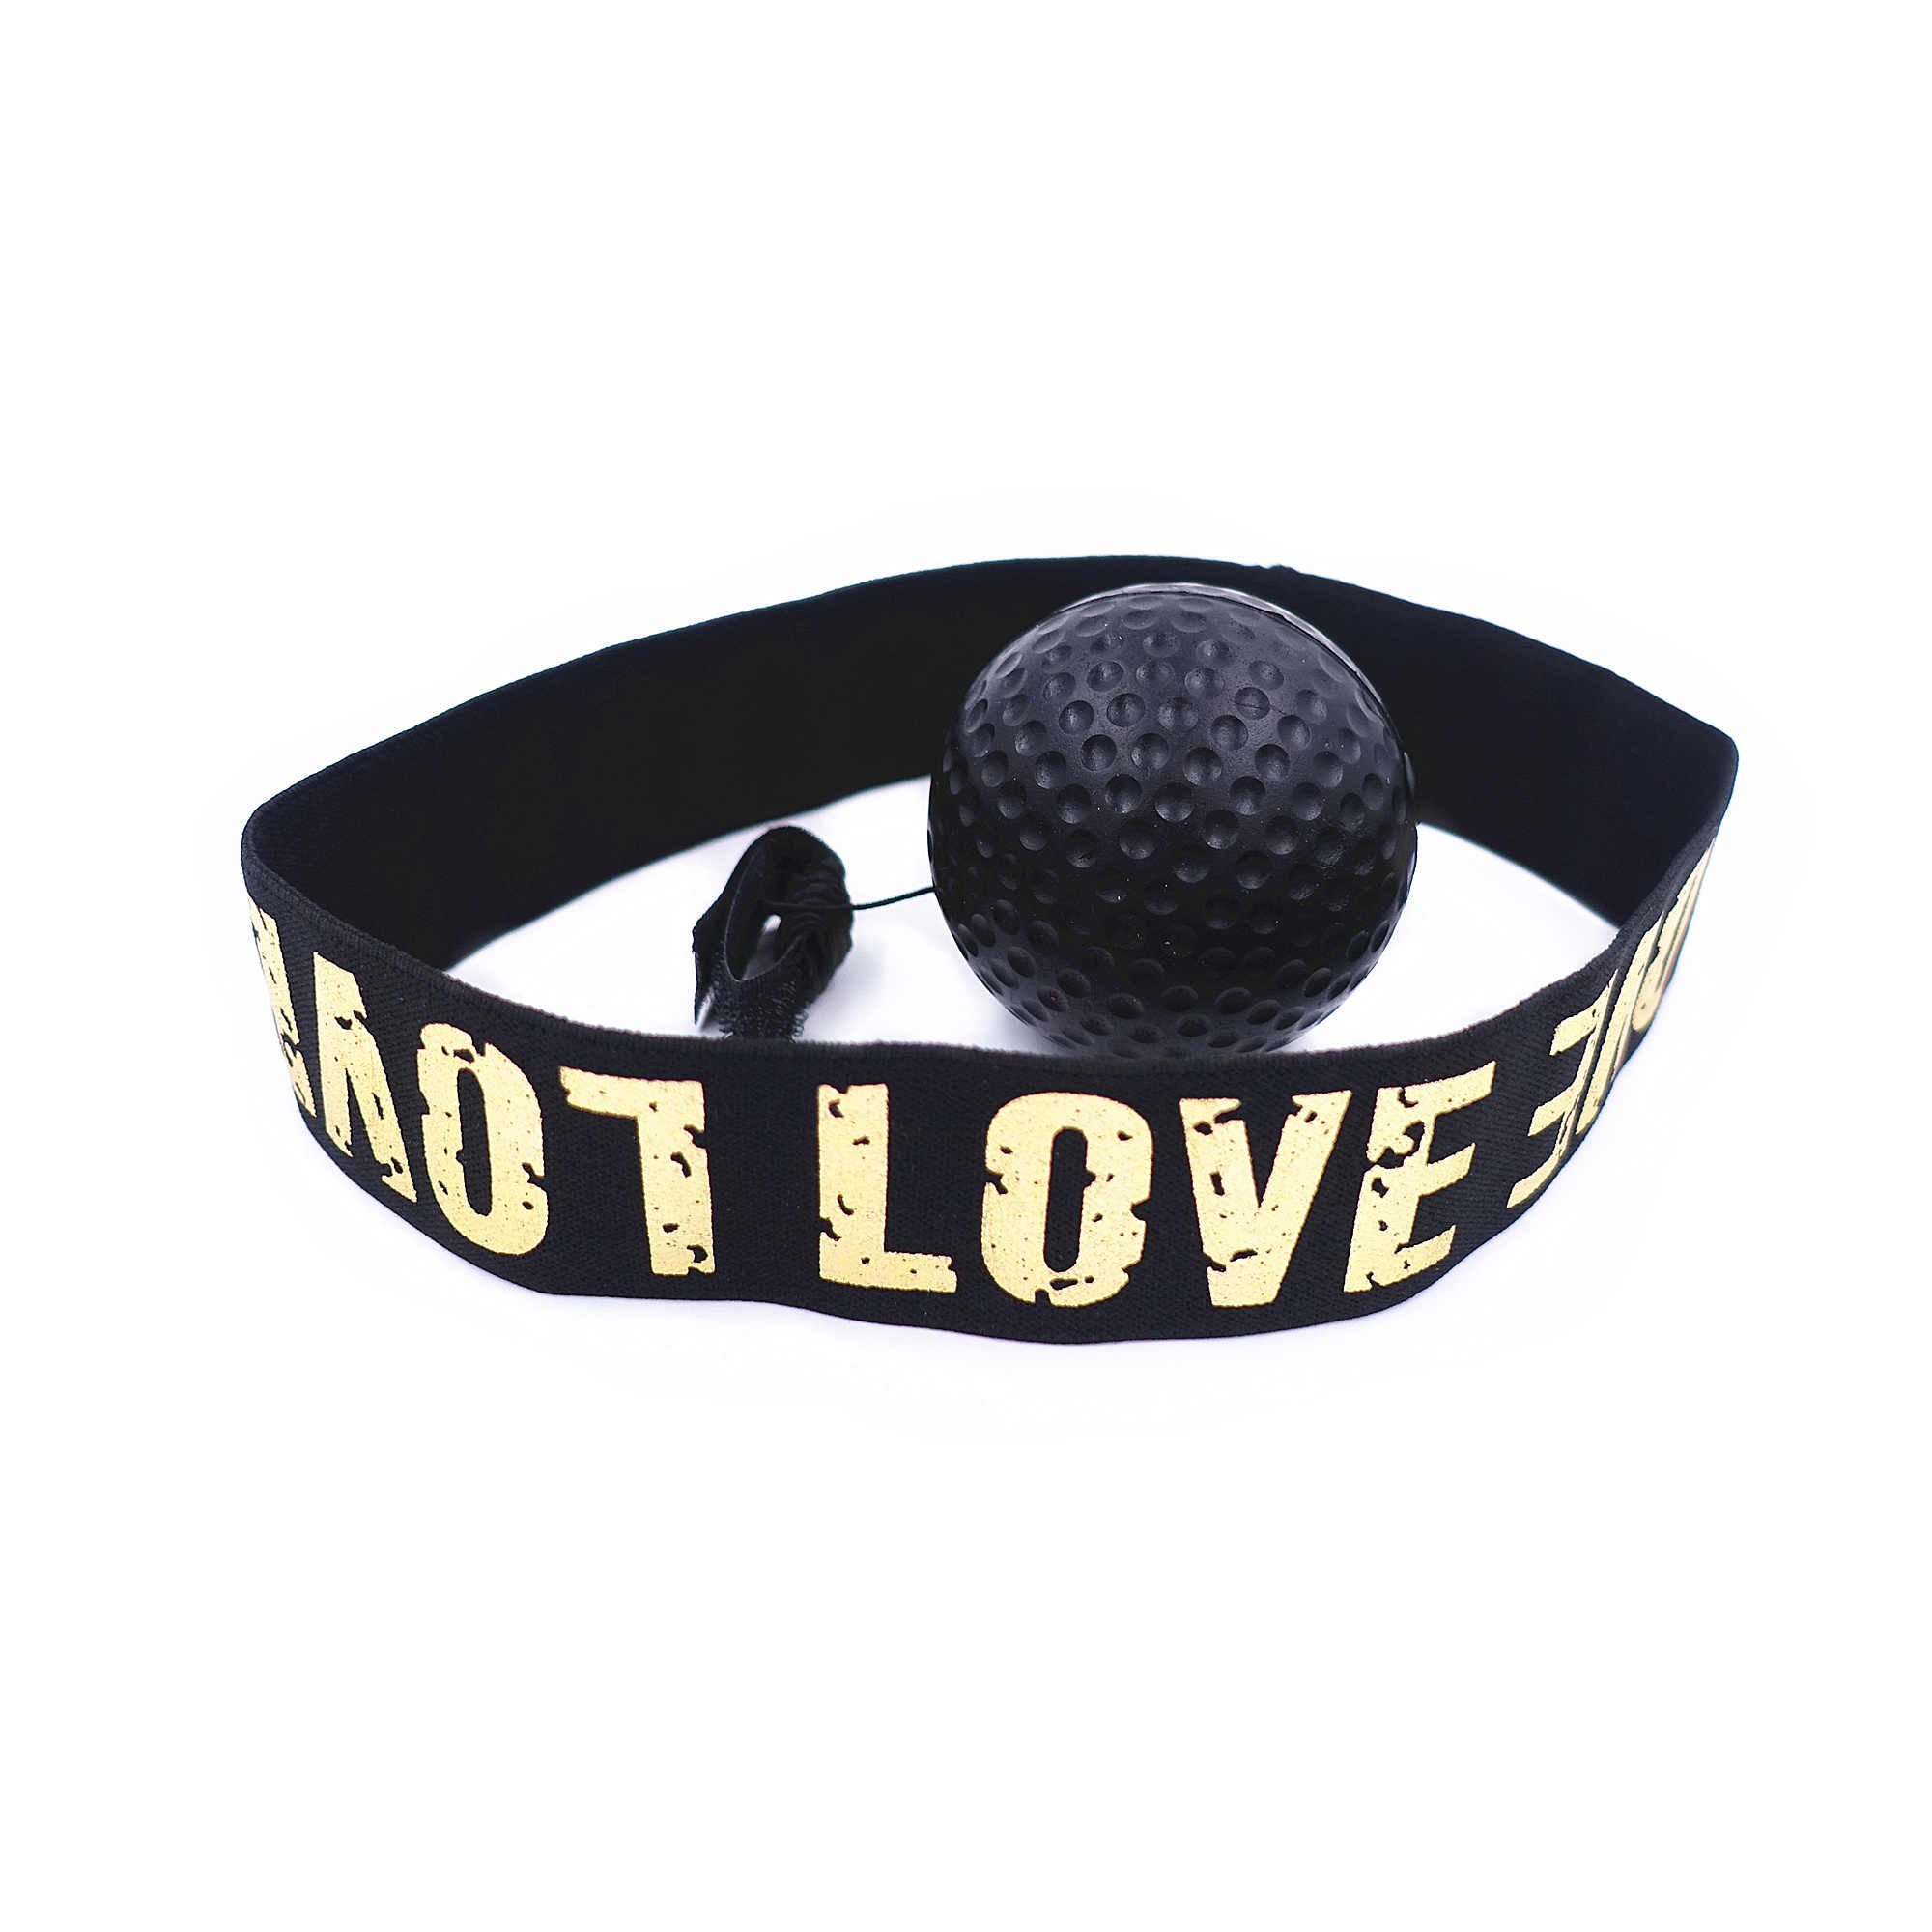 Early Christmas Gift 50% OFF🎄Boxing Reflex Ball Headband